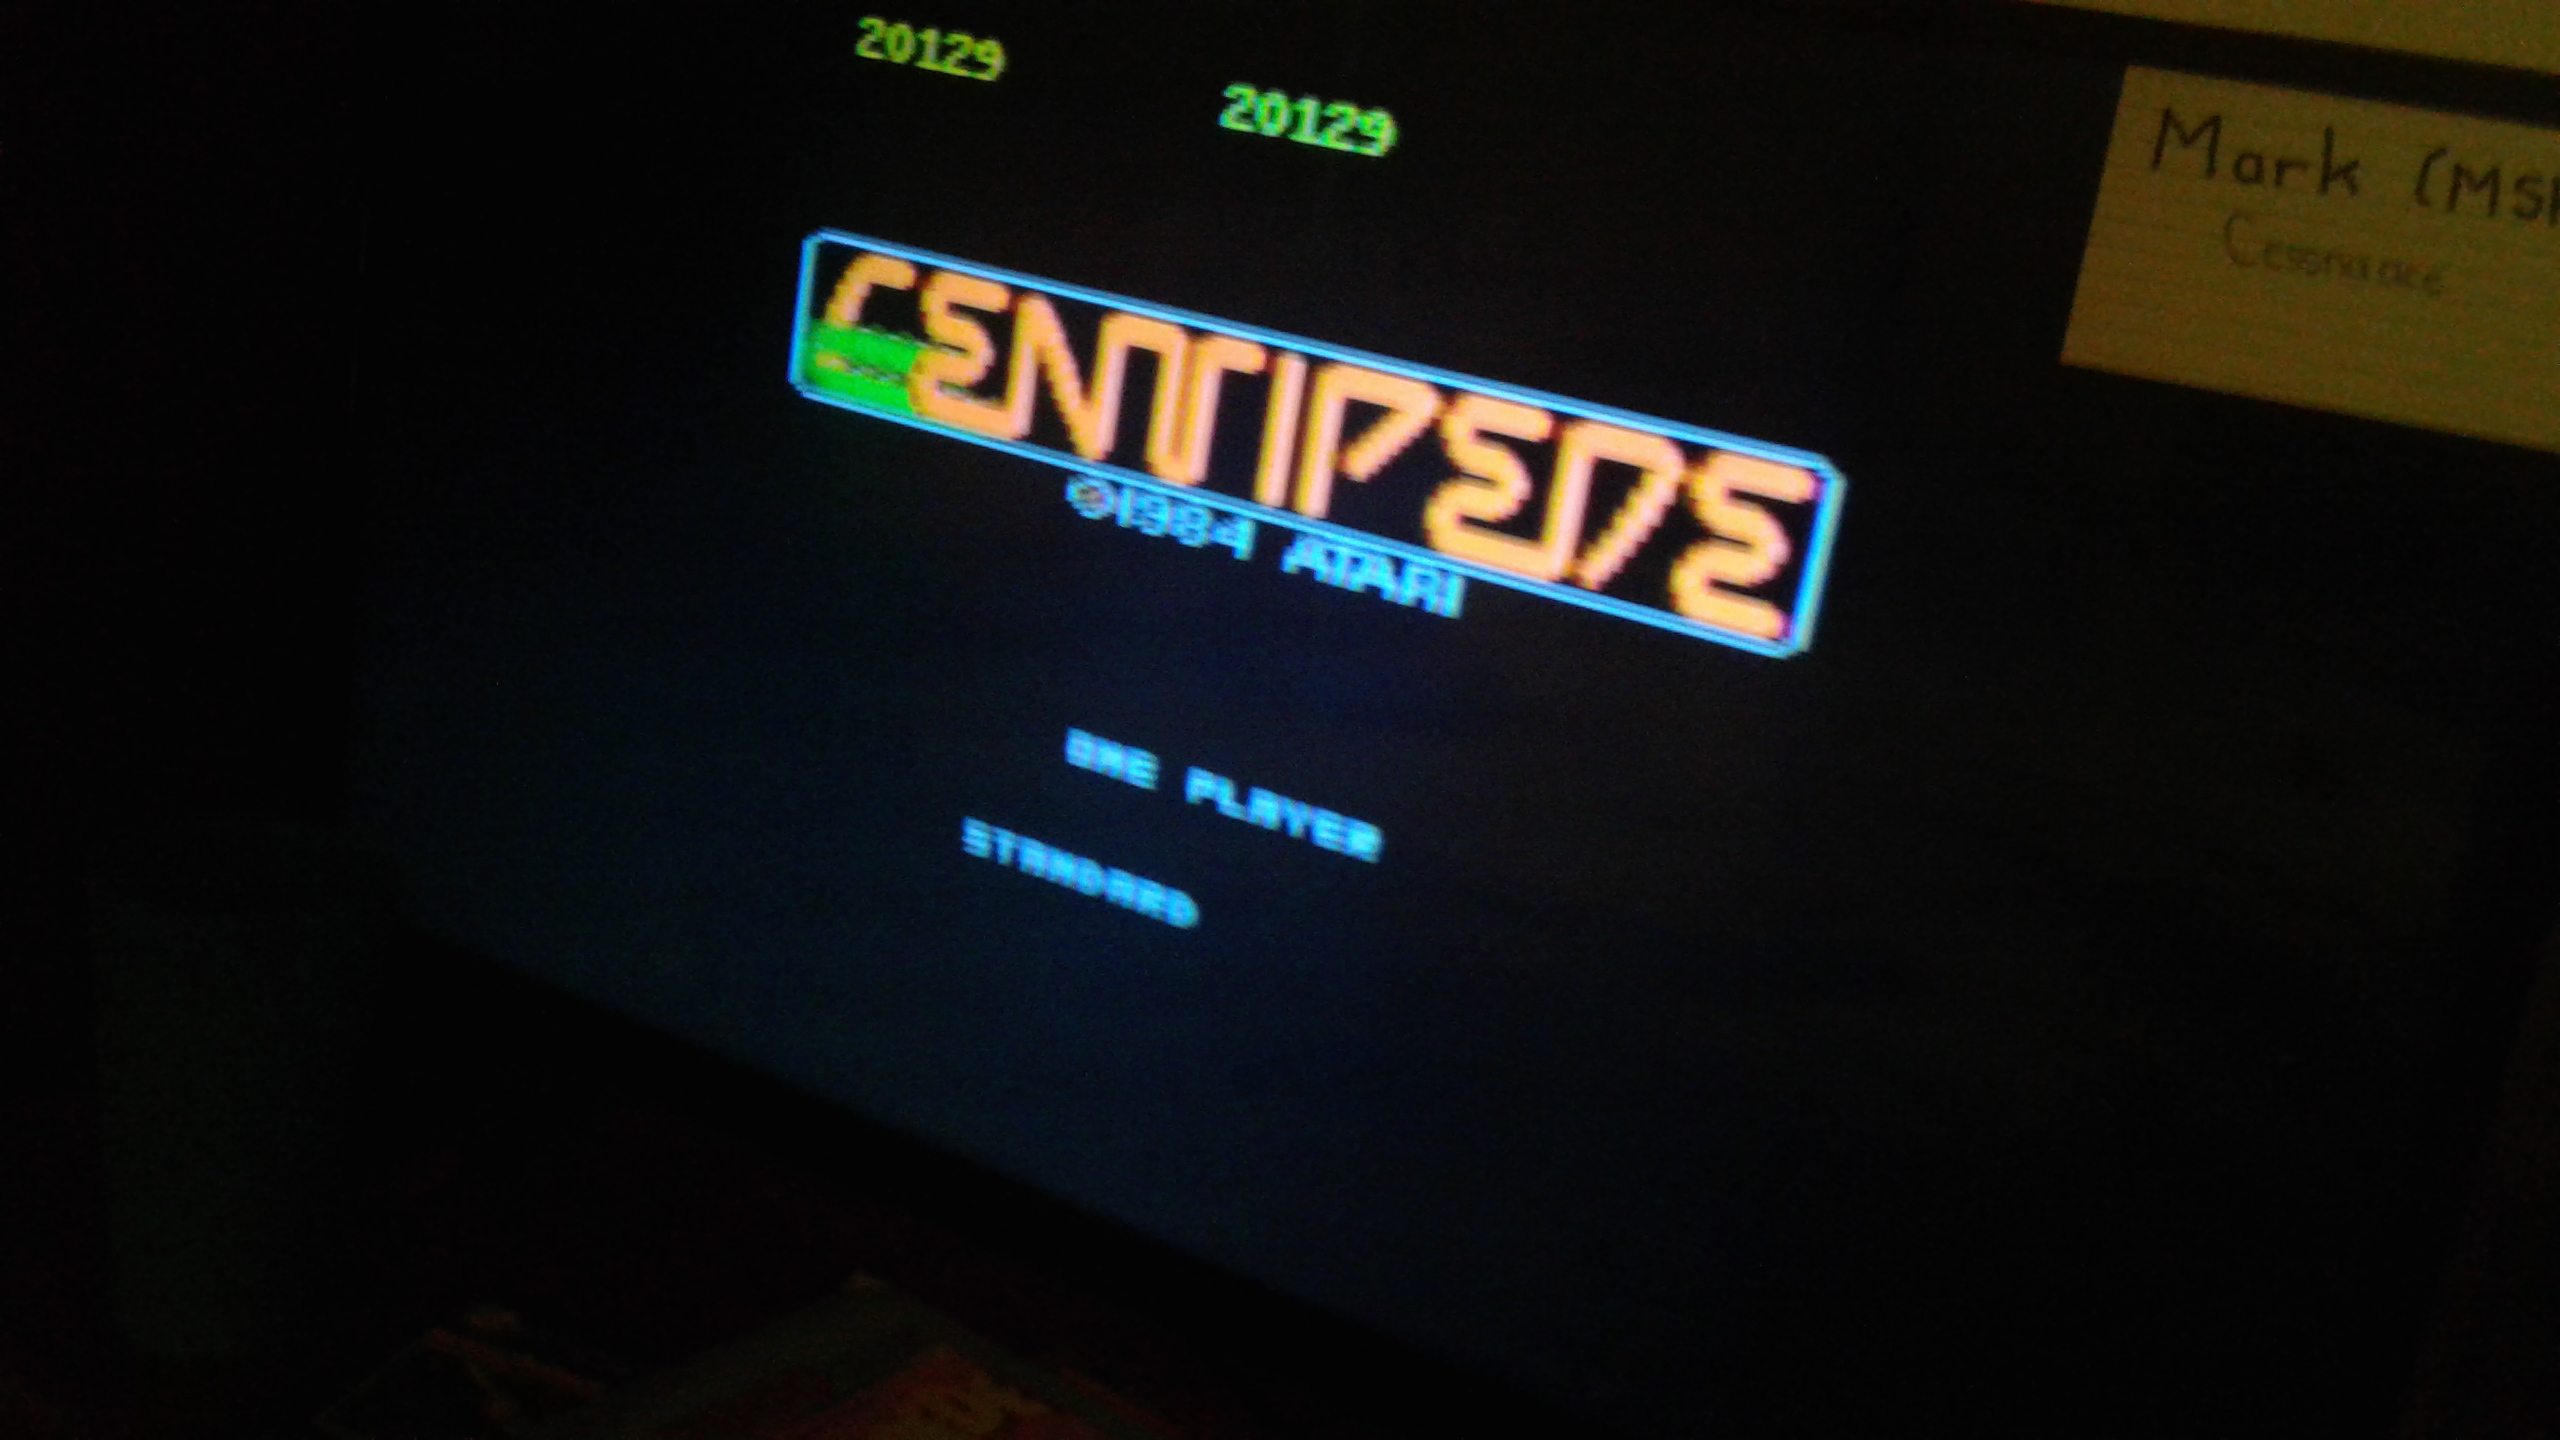 Mark: Centipede: Standard (Atari 7800) 20,129 points on 2019-04-18 00:13:26